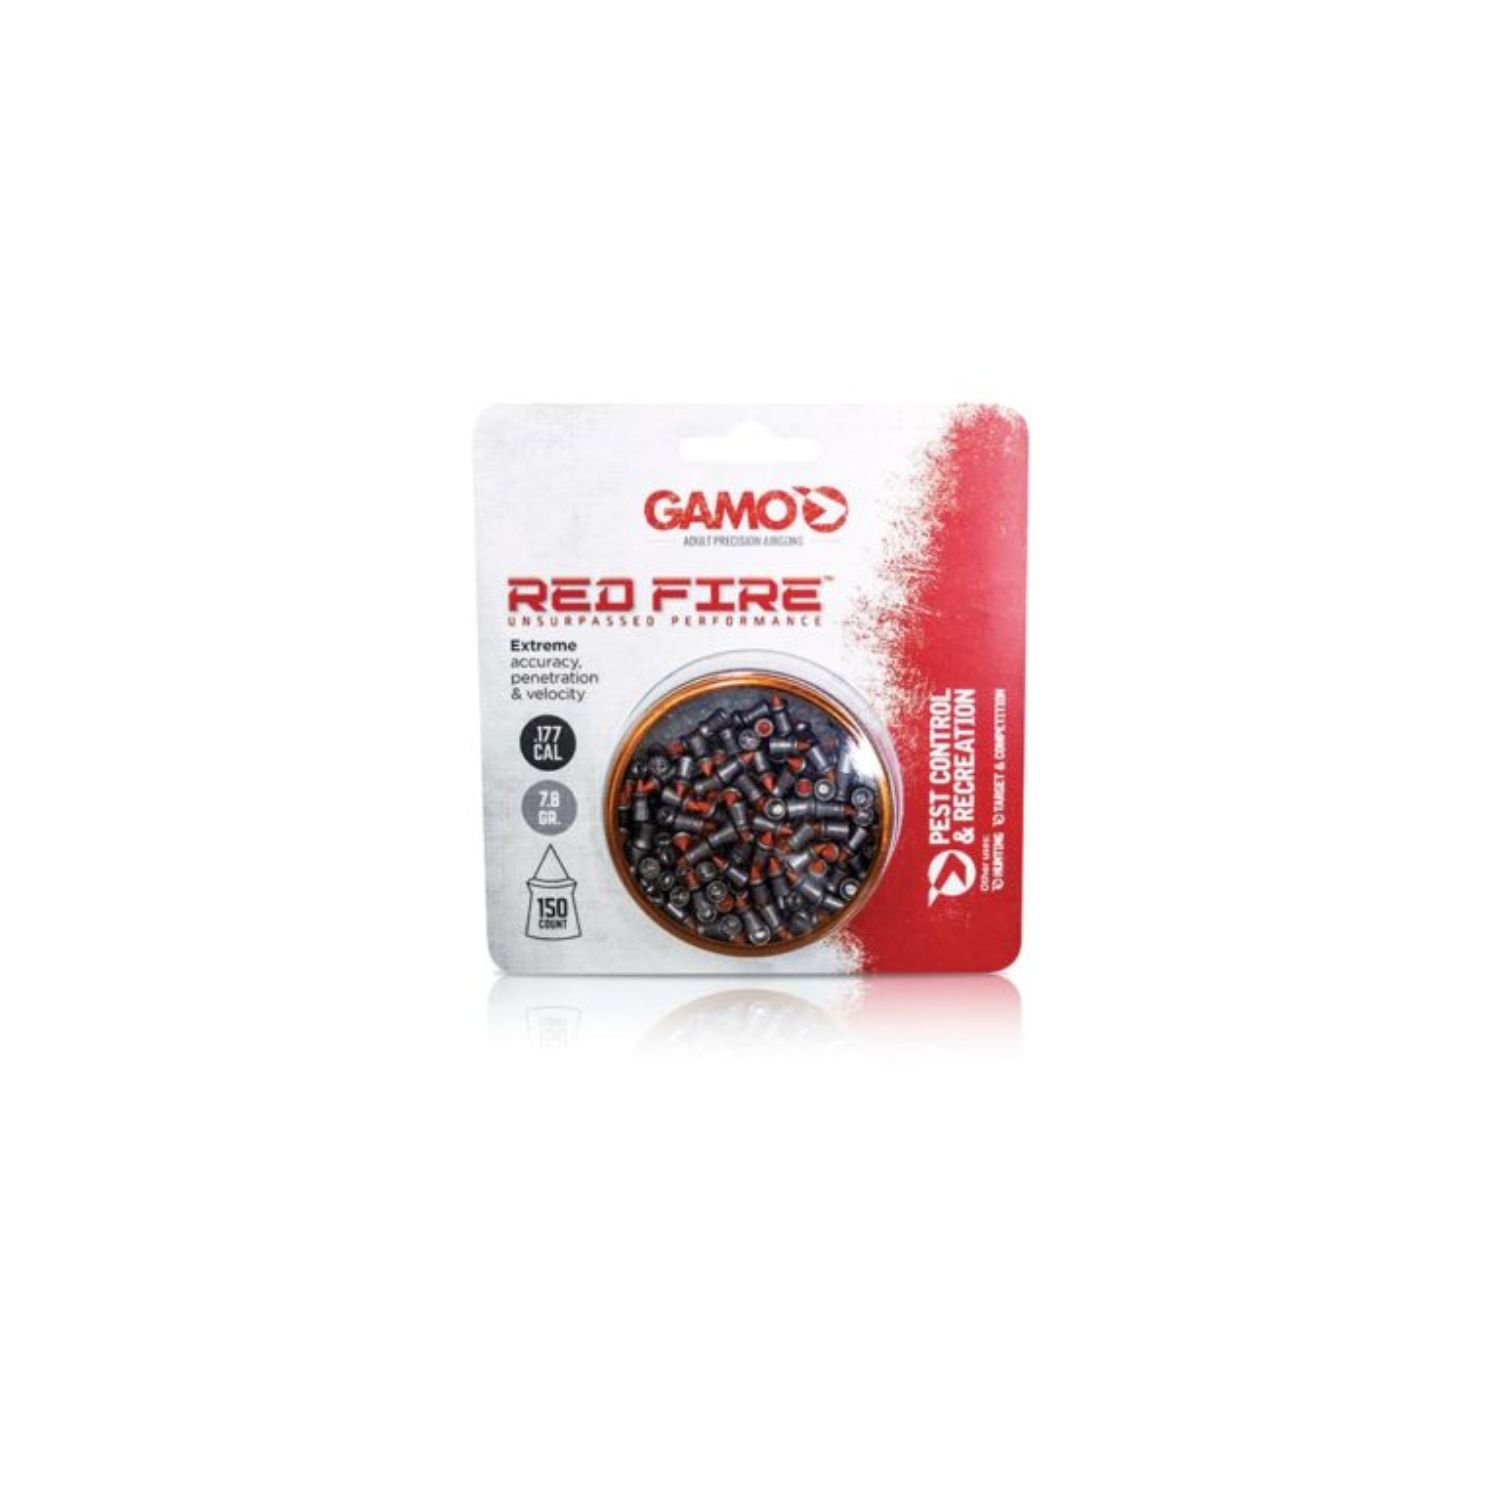 GAMO RED FIRE .177 PELLETS 7.8GR. 150-PACK